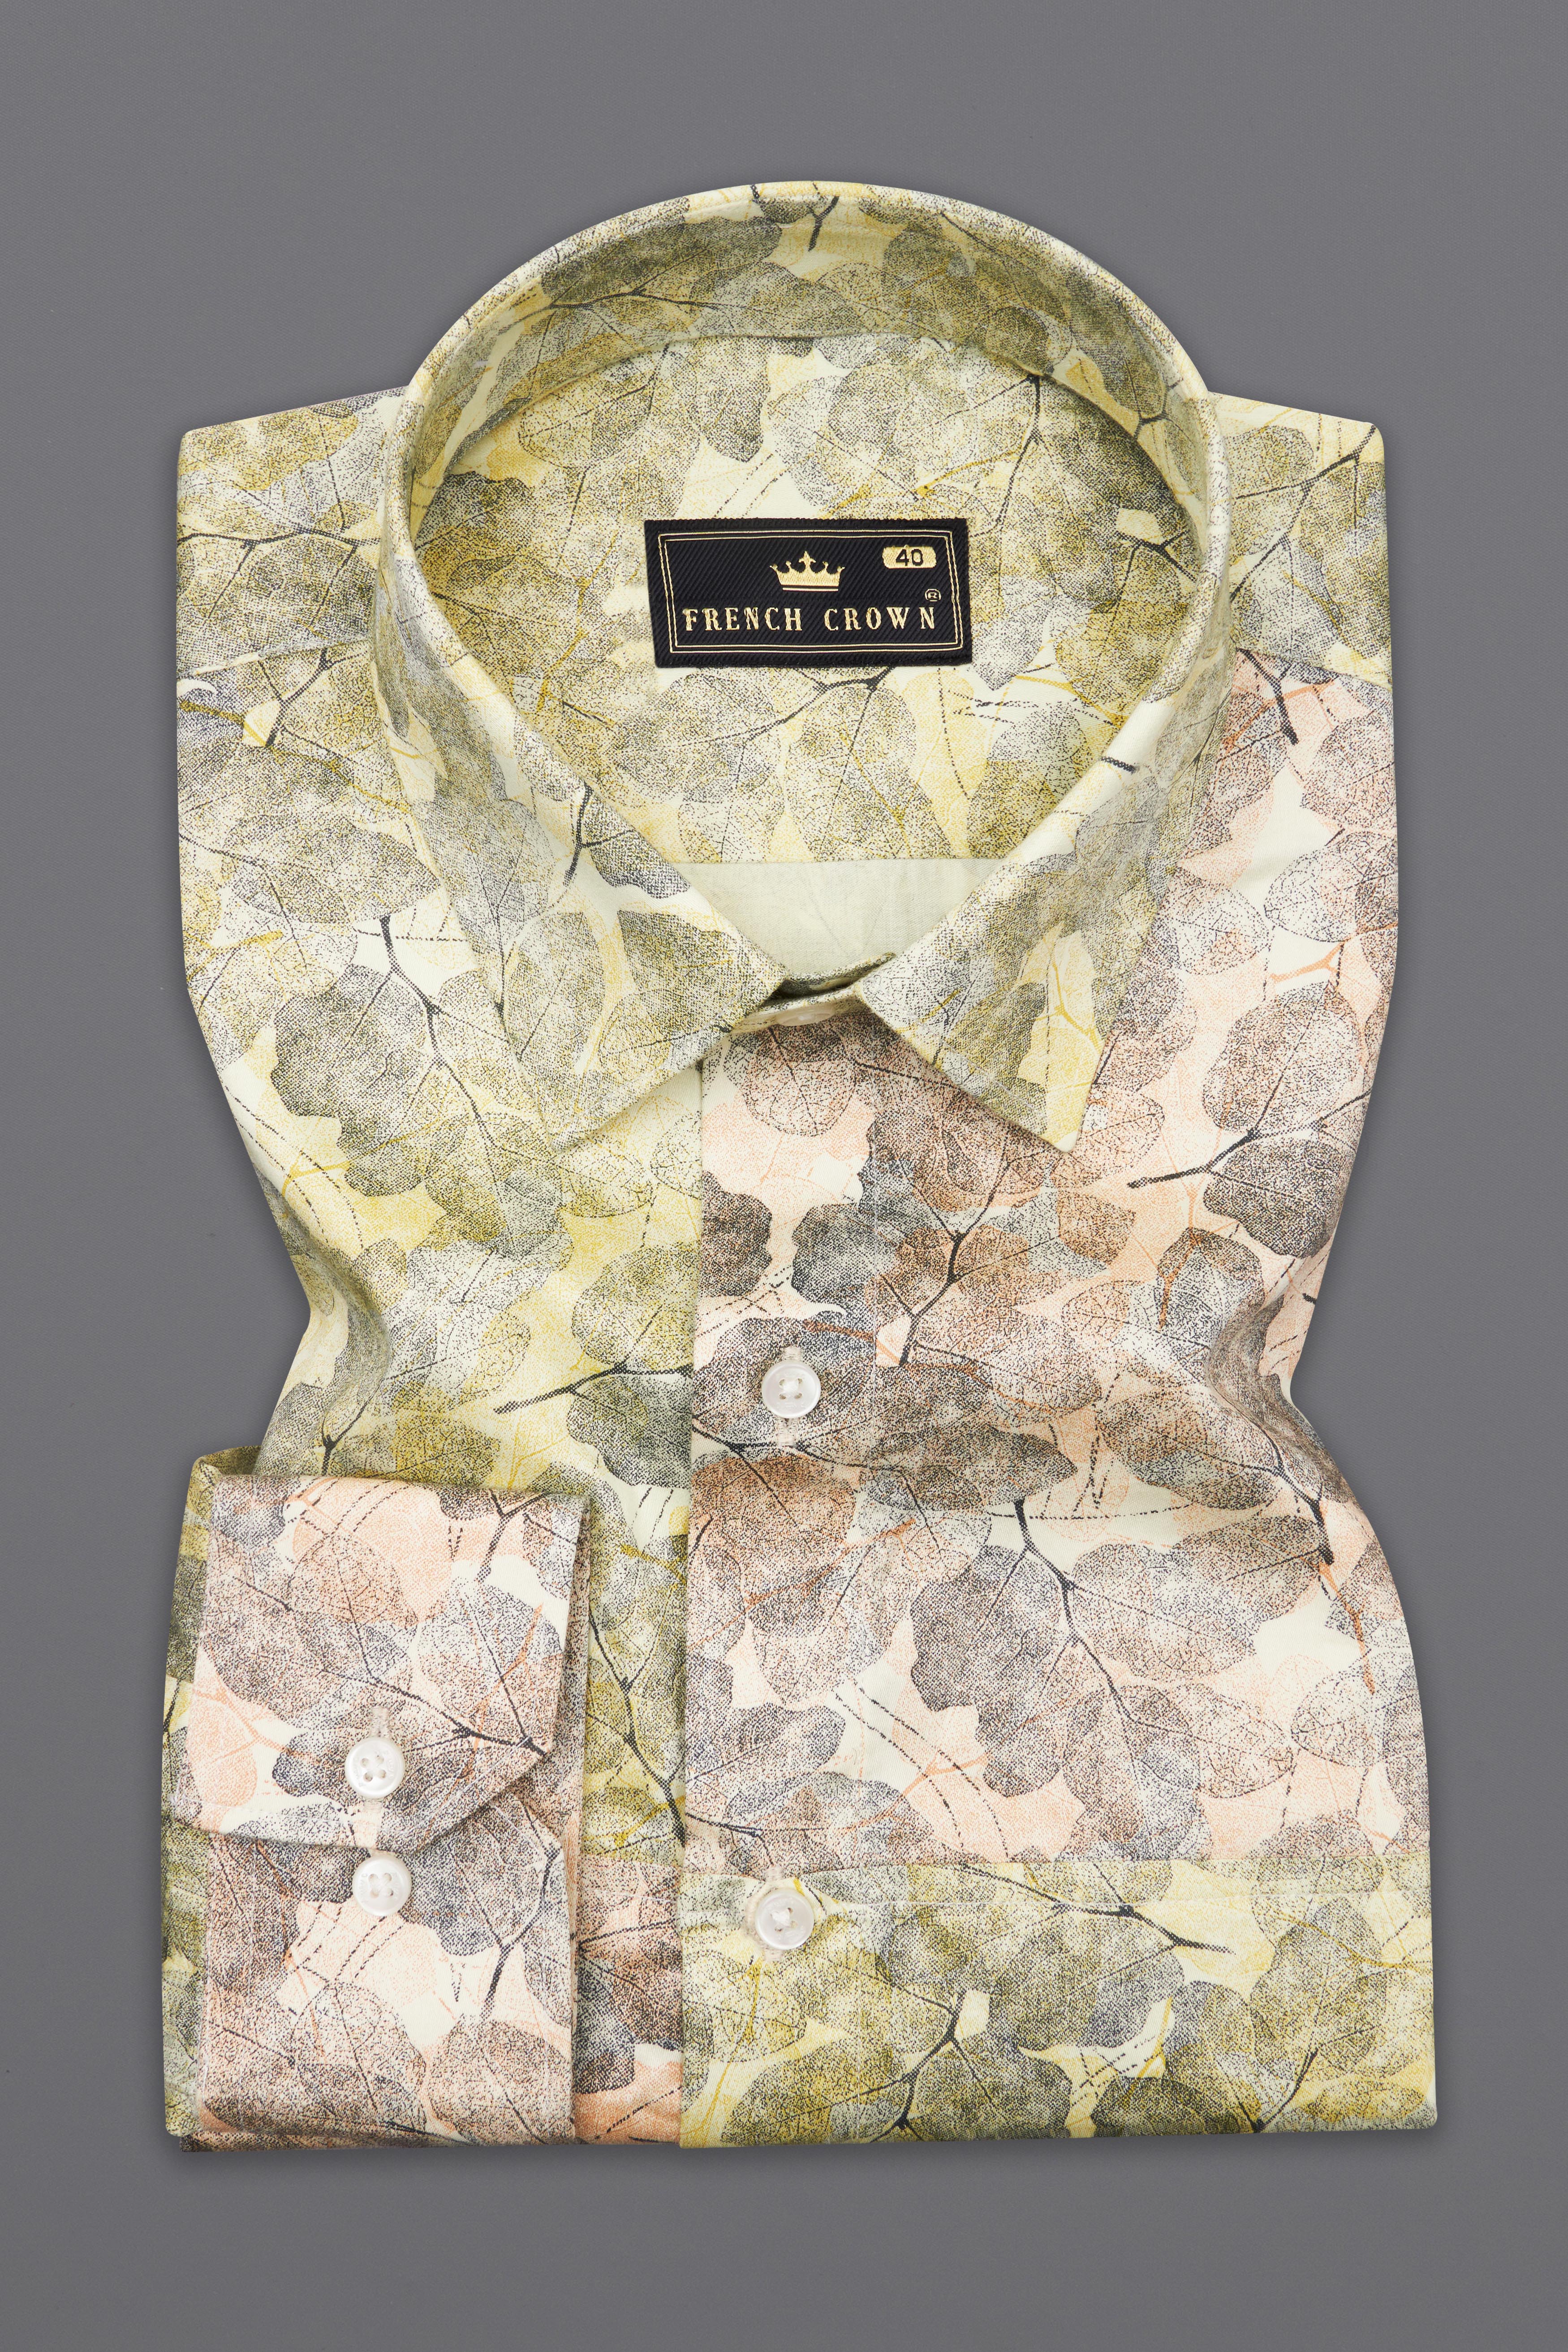 Sahara Yellow Leaves Printed Super Soft Premium Cotton Designer Shirts